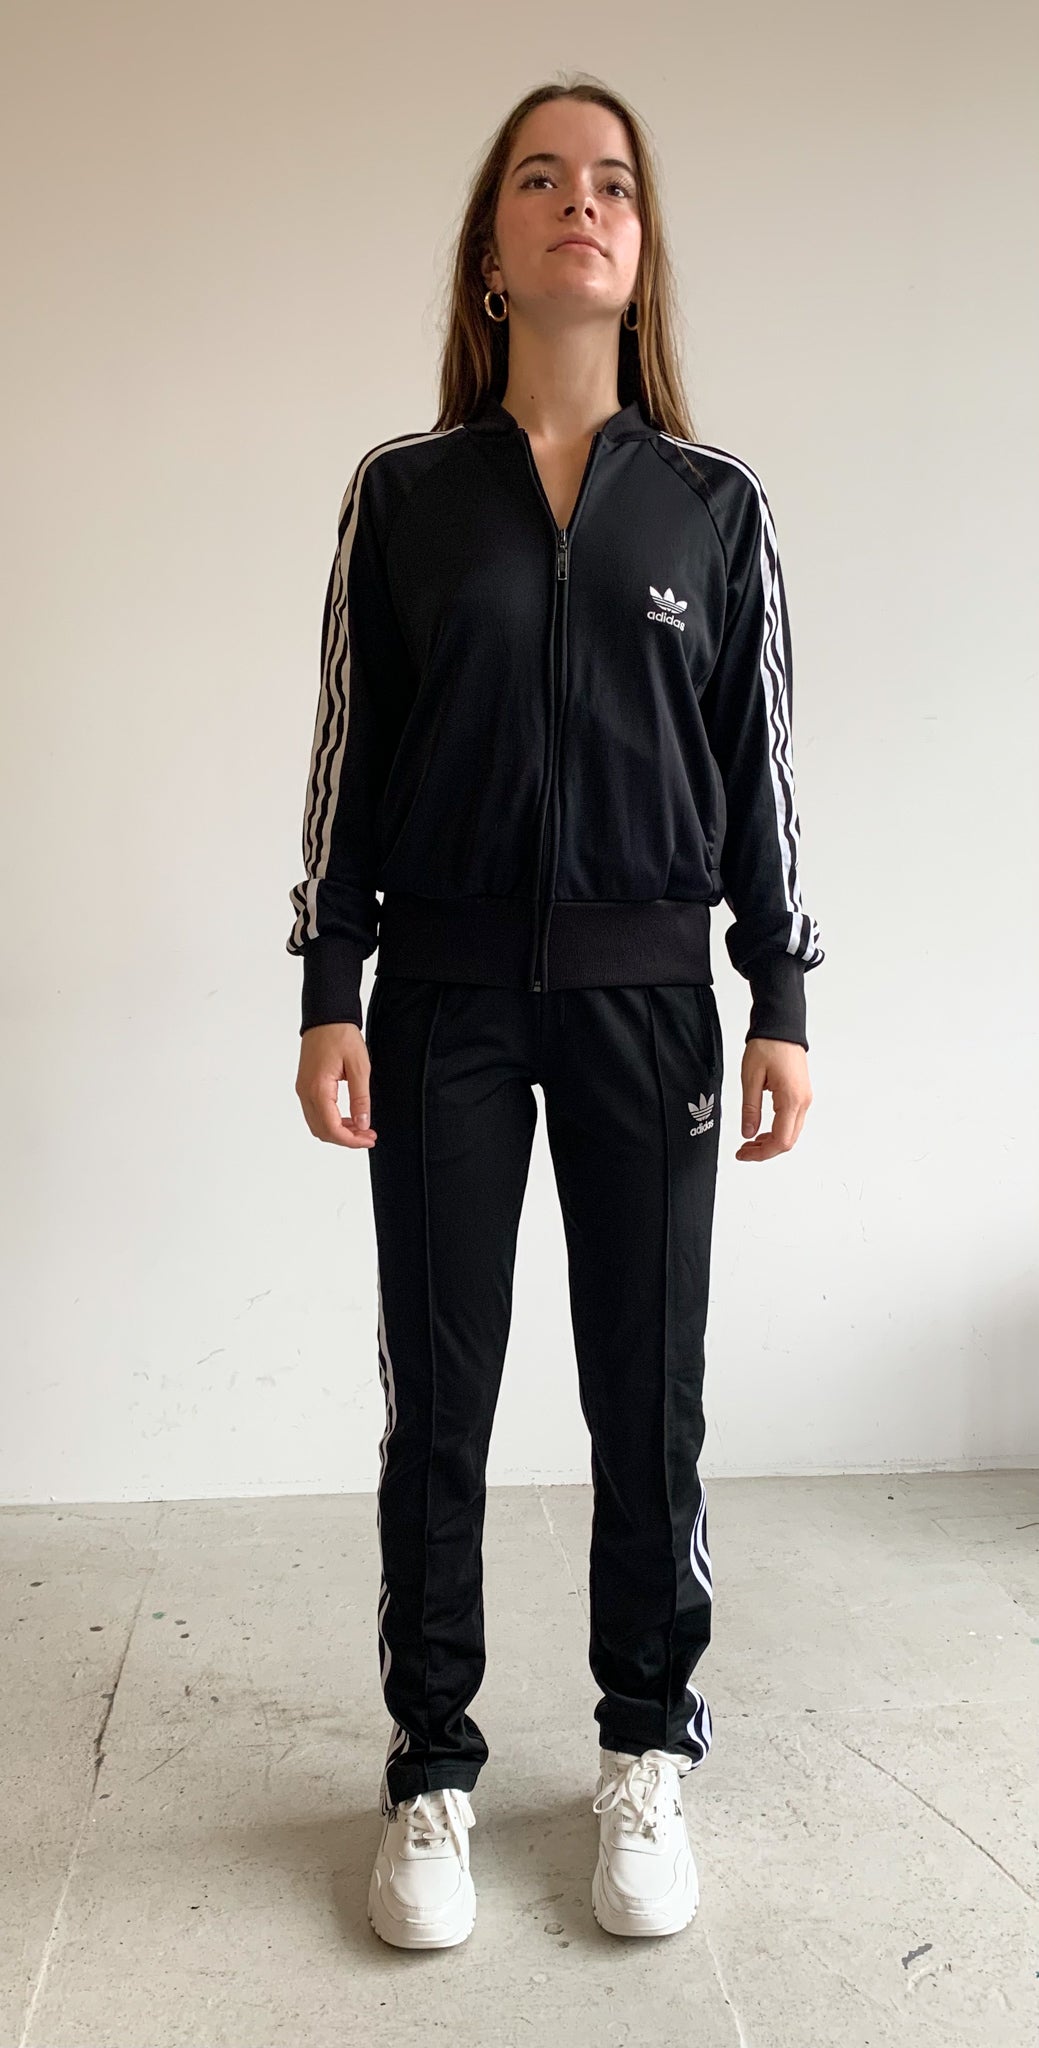 Black Adidas classic striped sweats